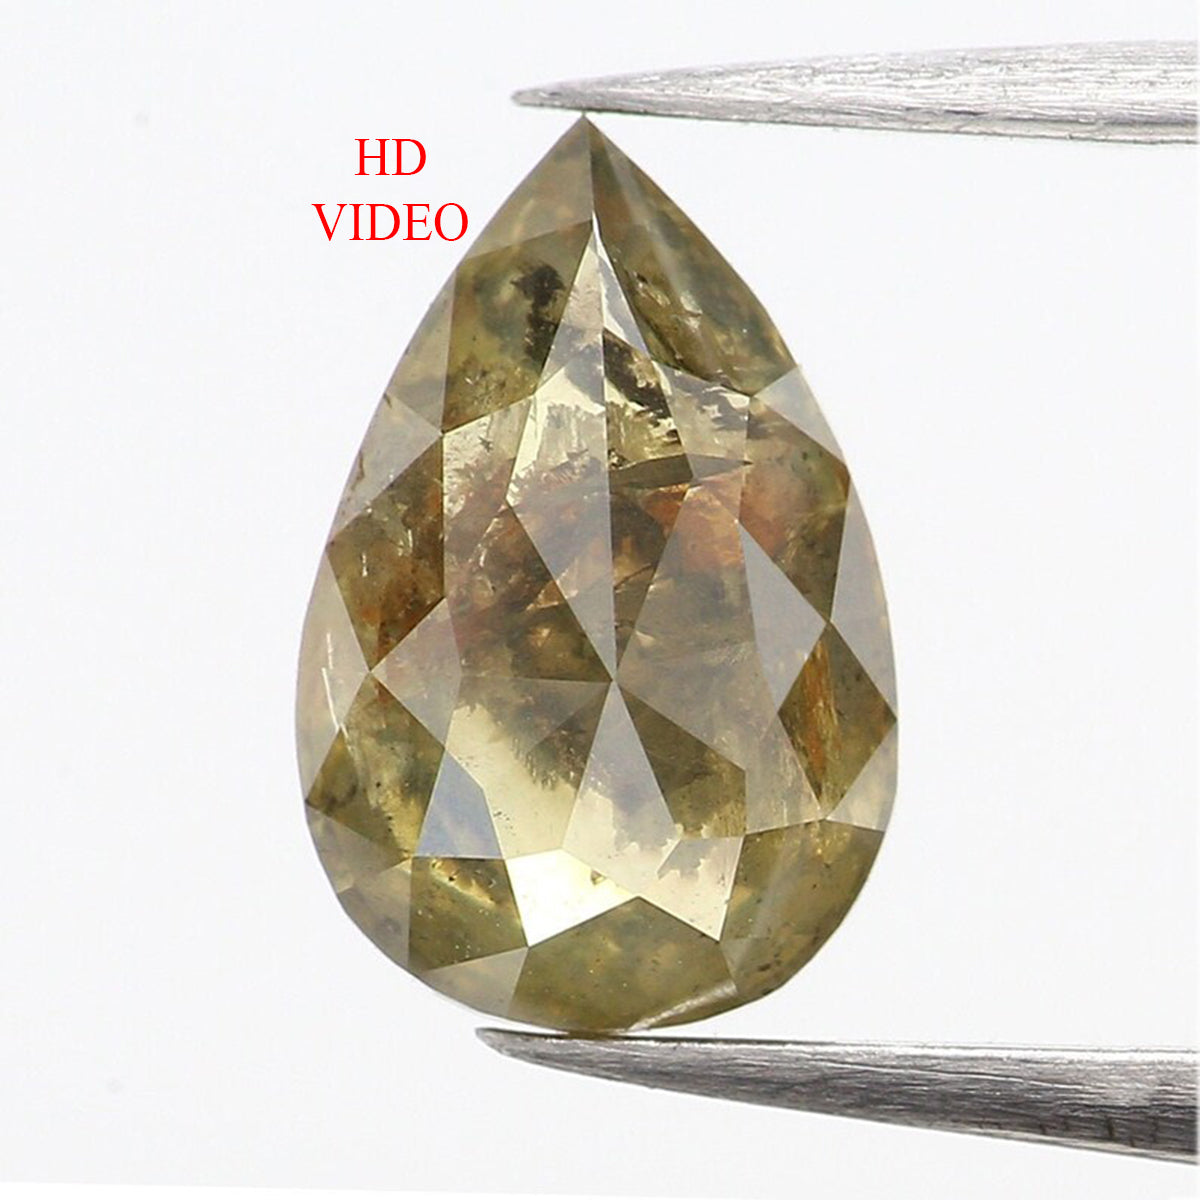 0.73 CT Natural Loose Diamond, Pear Diamond, Green Diamond, Rustic Diamond, Pear Cut Diamond, Fancy Color Diamond L442